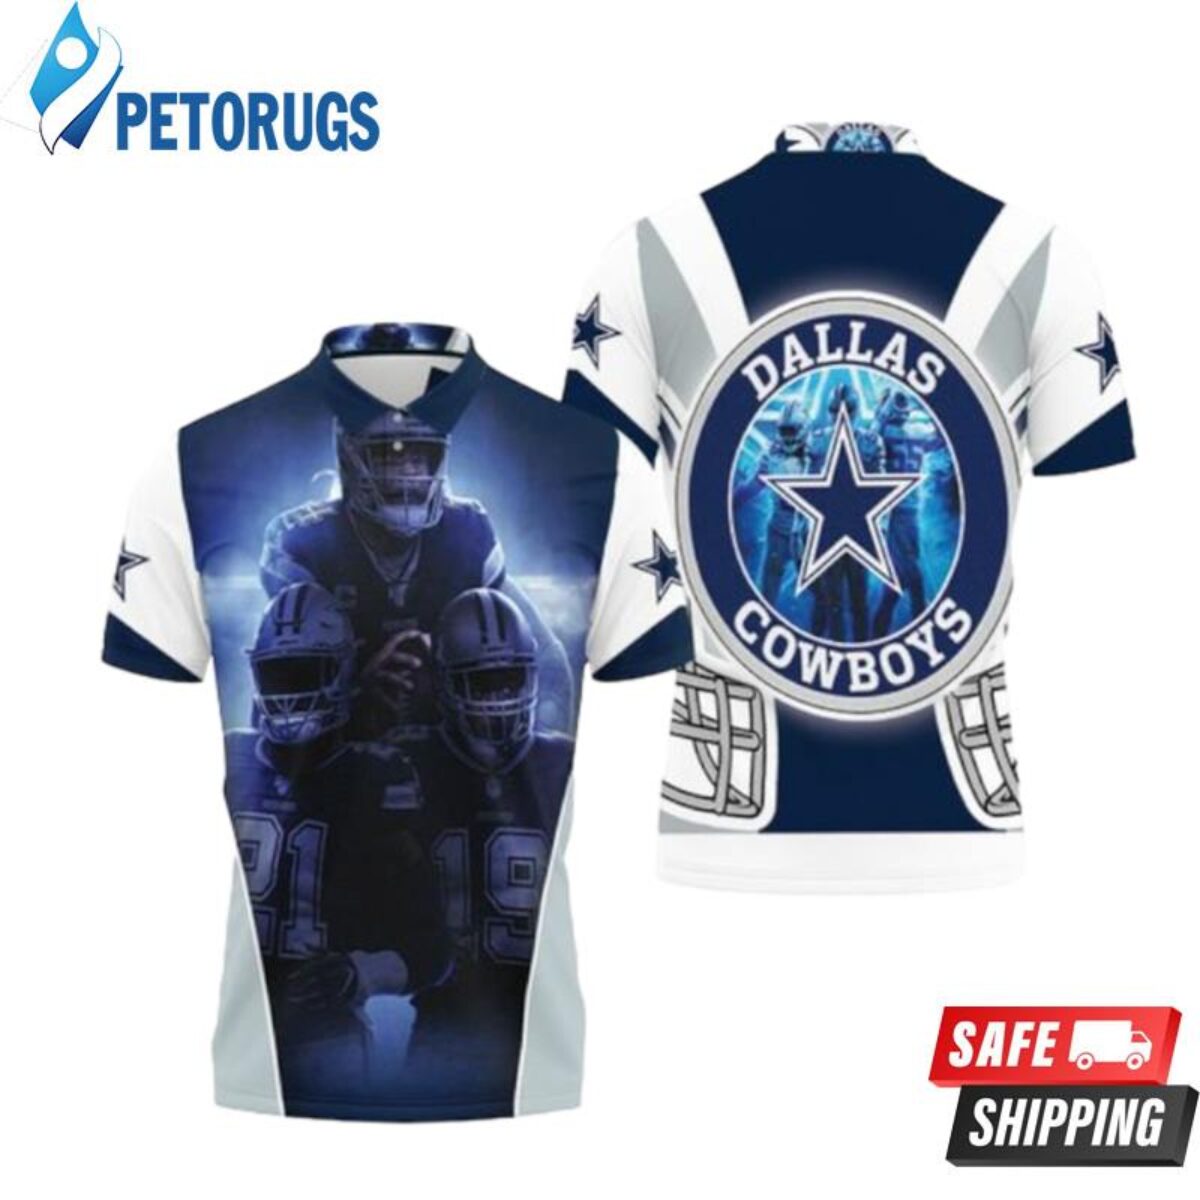 Dallas Cowboys Super Bowl 2021 Nfc East Division Champions Polo Shirts -  Peto Rugs